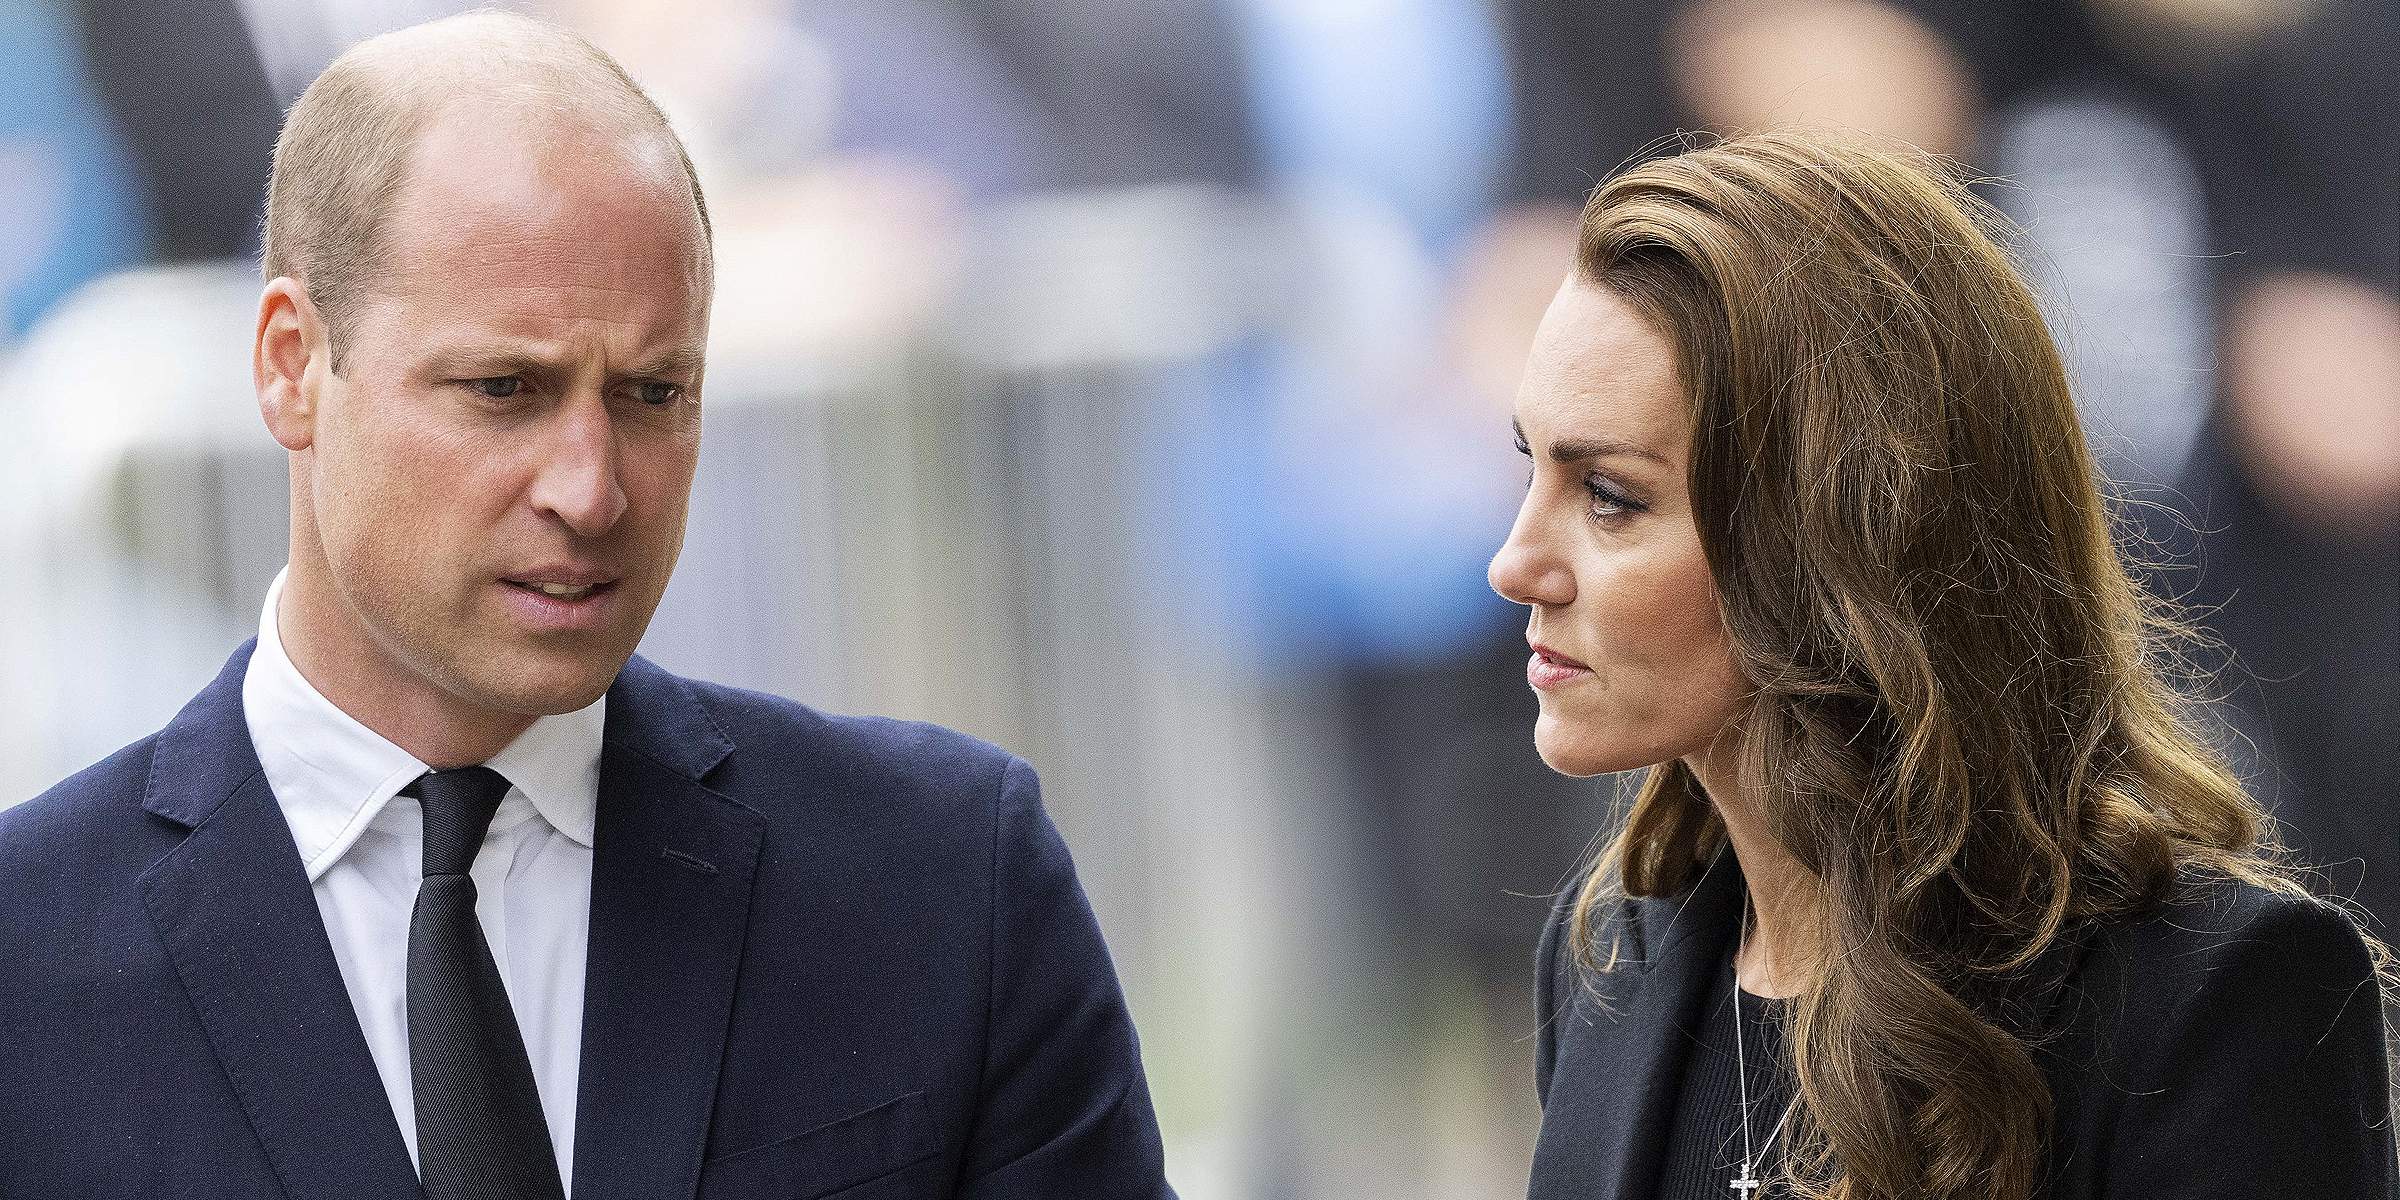 Le prince William et la princesse Catherine Middleton | Source : Getty Images